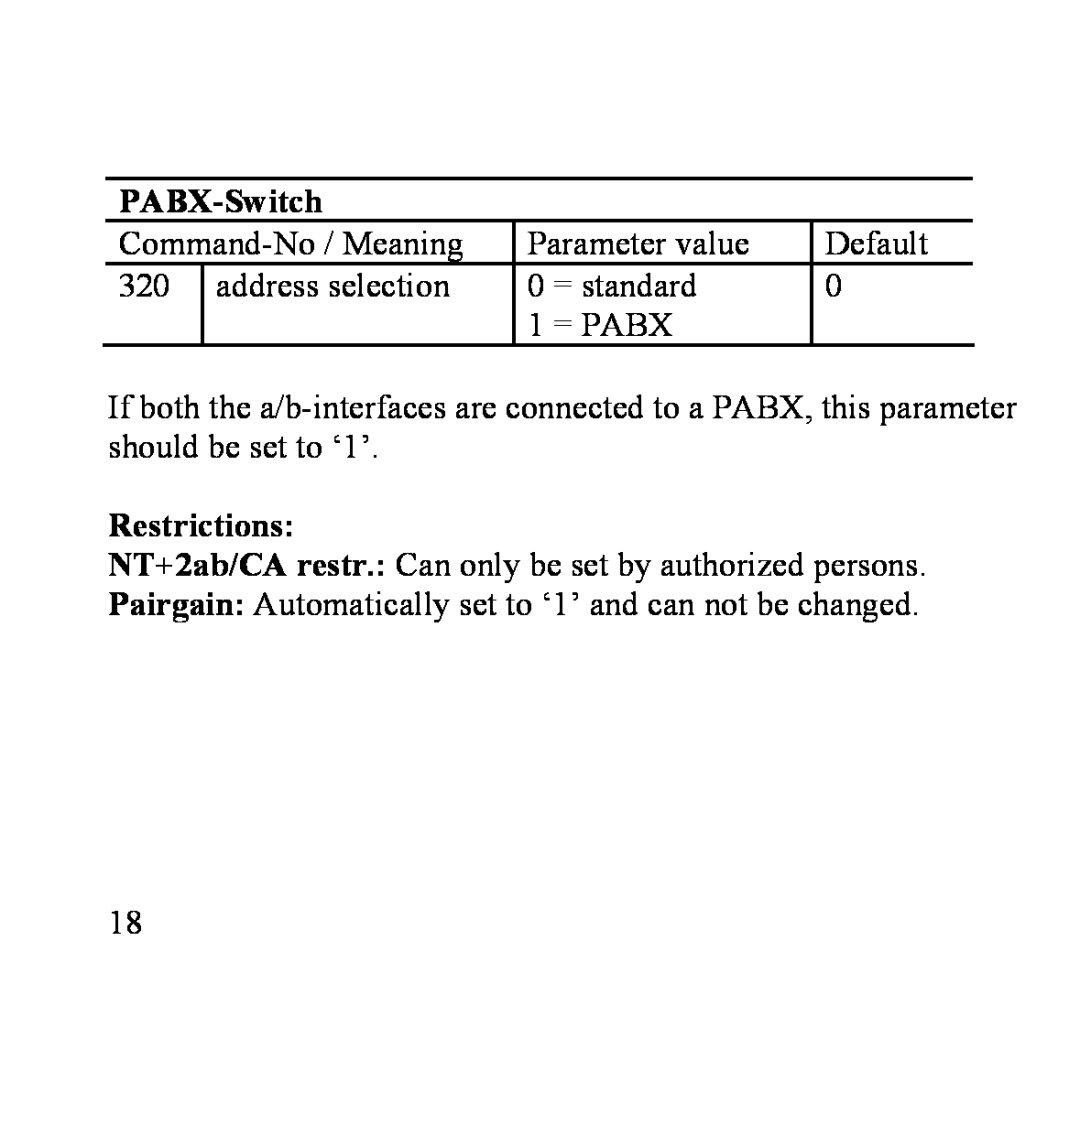 Siemens SANTIS-ab user manual PABX-Switch, Restrictions 